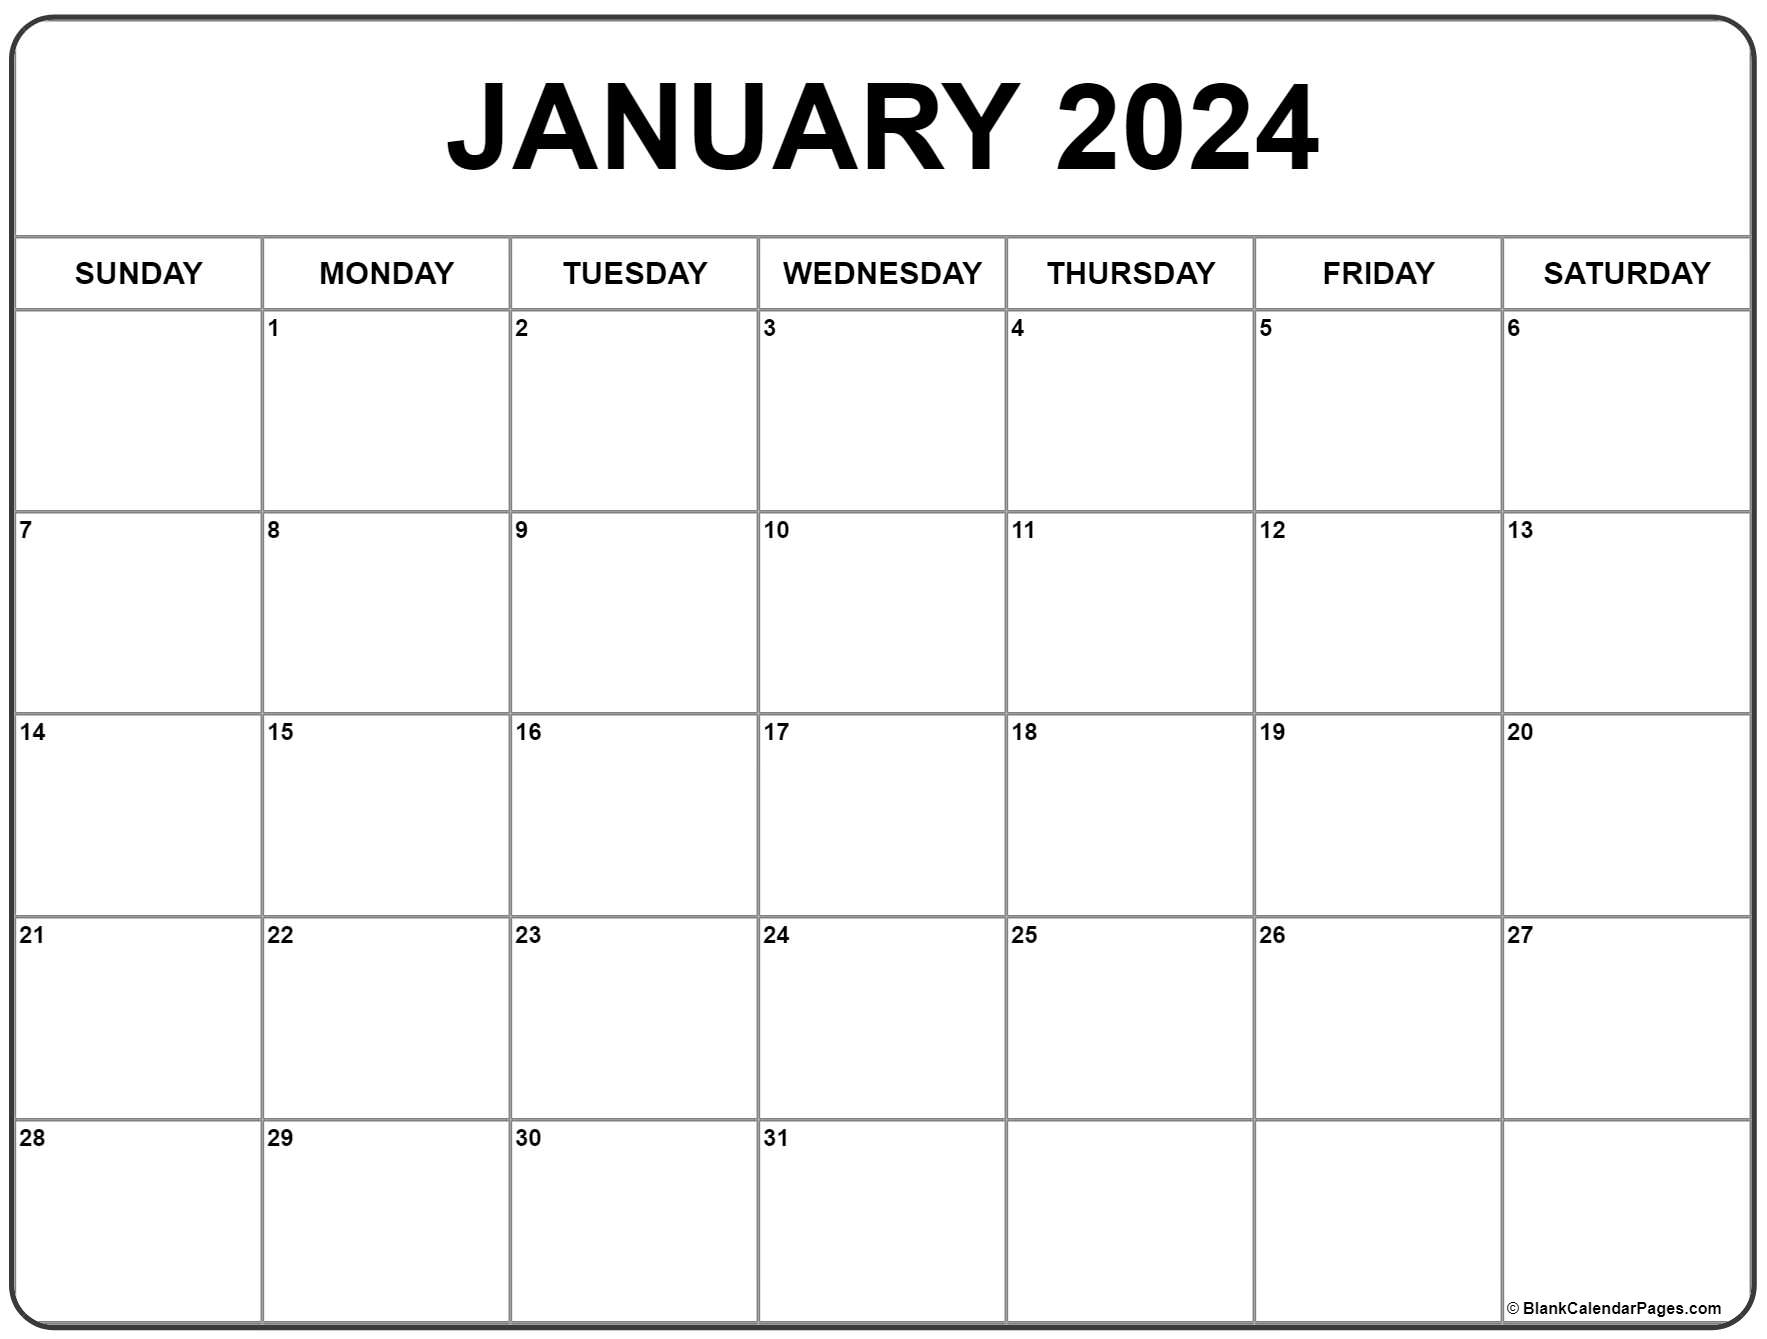 January 2024 Calendar | Free Printable Calendar | Printable Calendar 2024 January